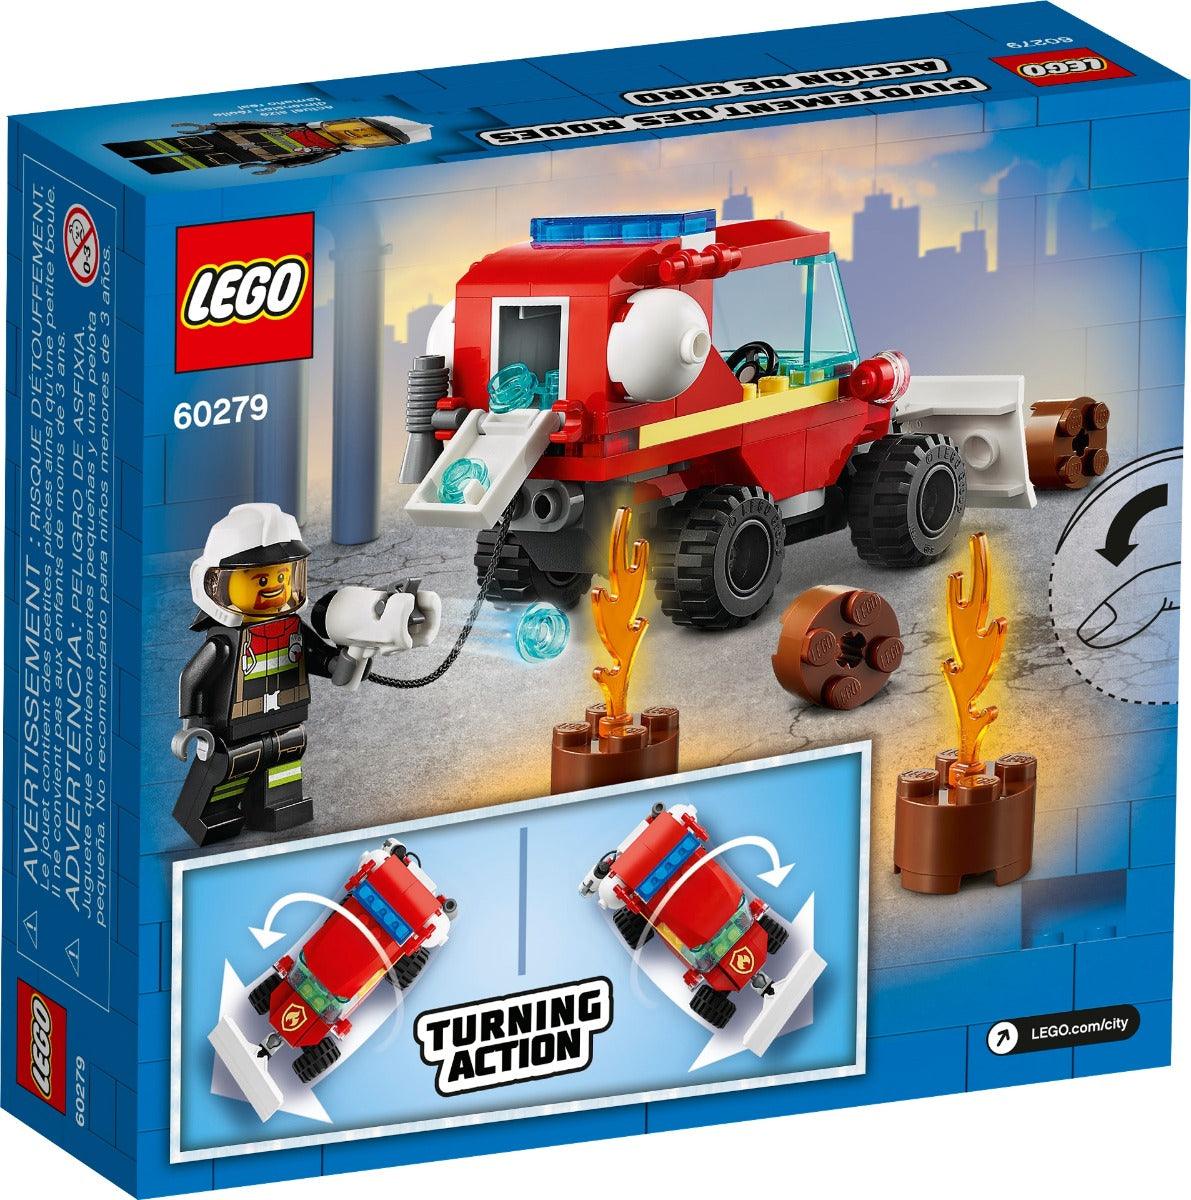 LEGO City Fire Hazard Truck